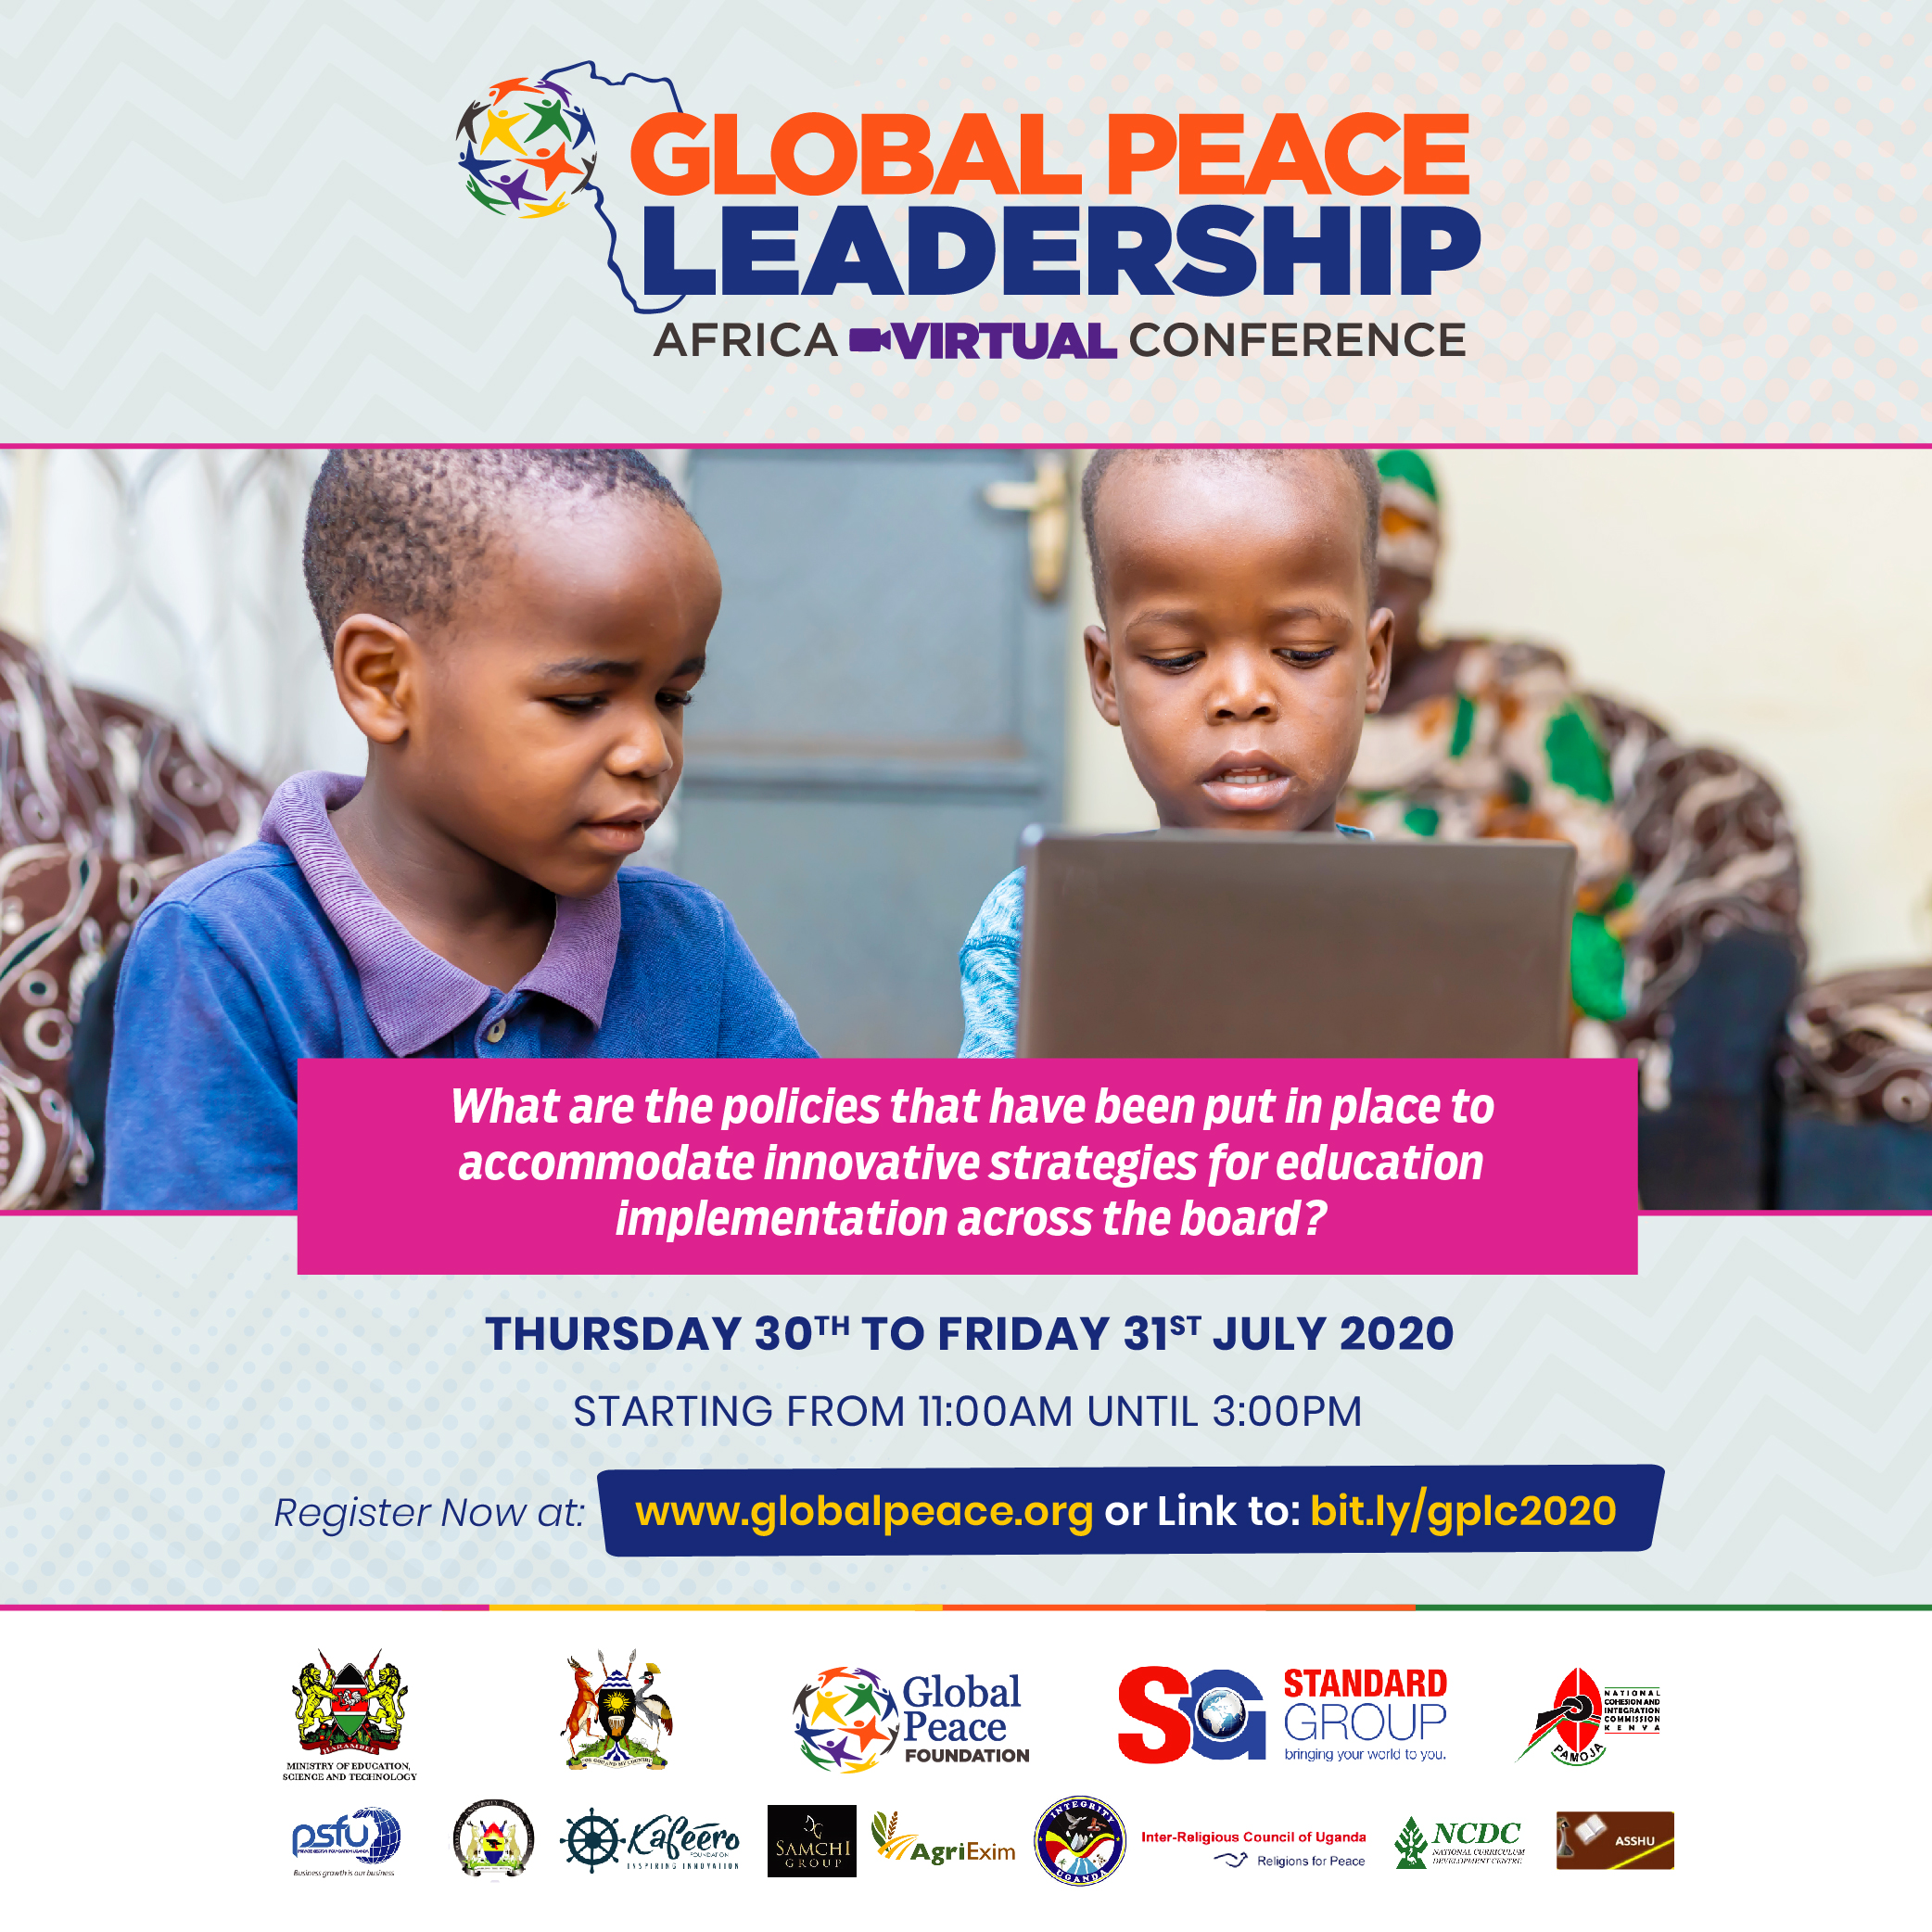 Global Peace Foundation | Dr. Manu Chandaria: Global Peace Leadership Africa Virtual Conference 2020 Opening Plenary